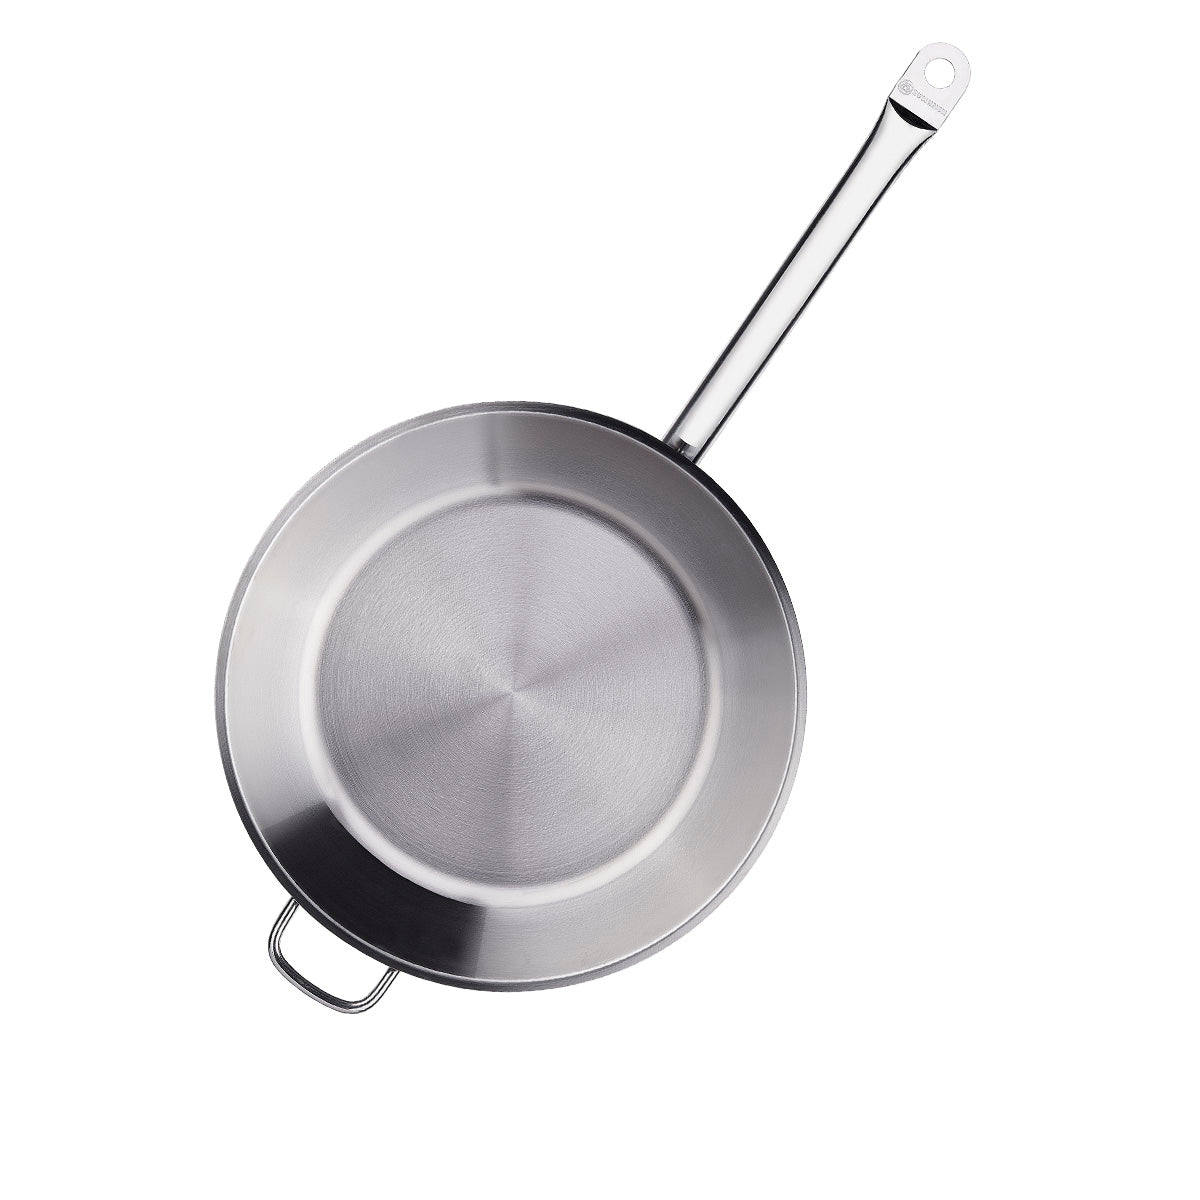 Korkmaz Proline Frying Pan 40cm - A1179